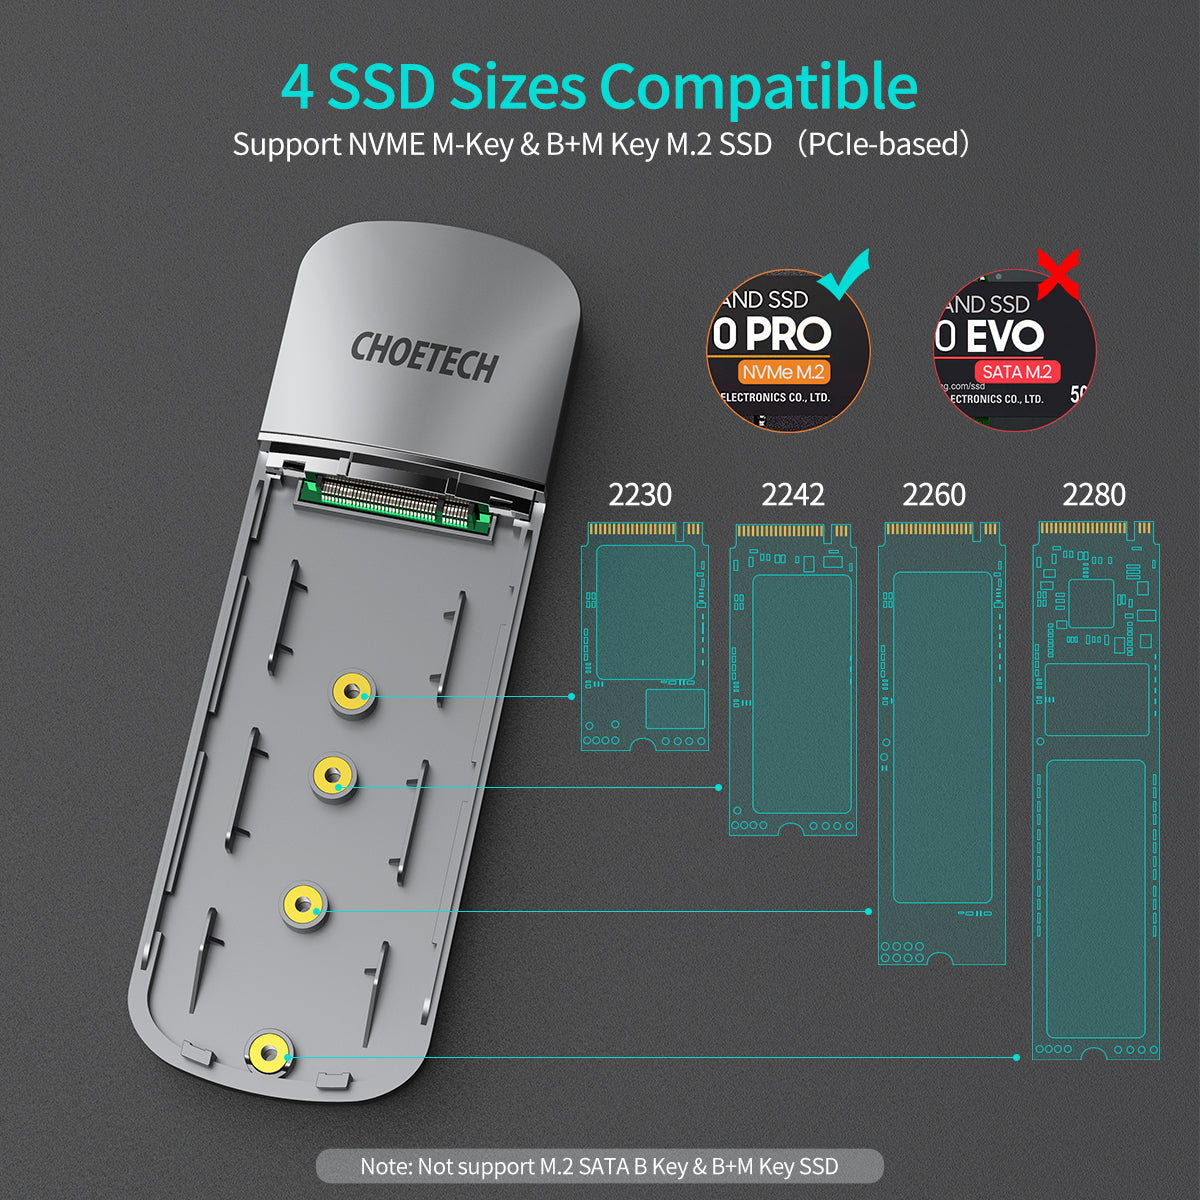 PC-HDE16 CHOETECH M.2 NVMe SSD Gabinete, USB 3.1 Gen 2 [10Gbps] a NVME PCI-E M-Key Unidad de estado sólido SSD Adaptador de gabinete externo Compatibilidad con M.2 NVMe SSD 2280 2260 2242 2230